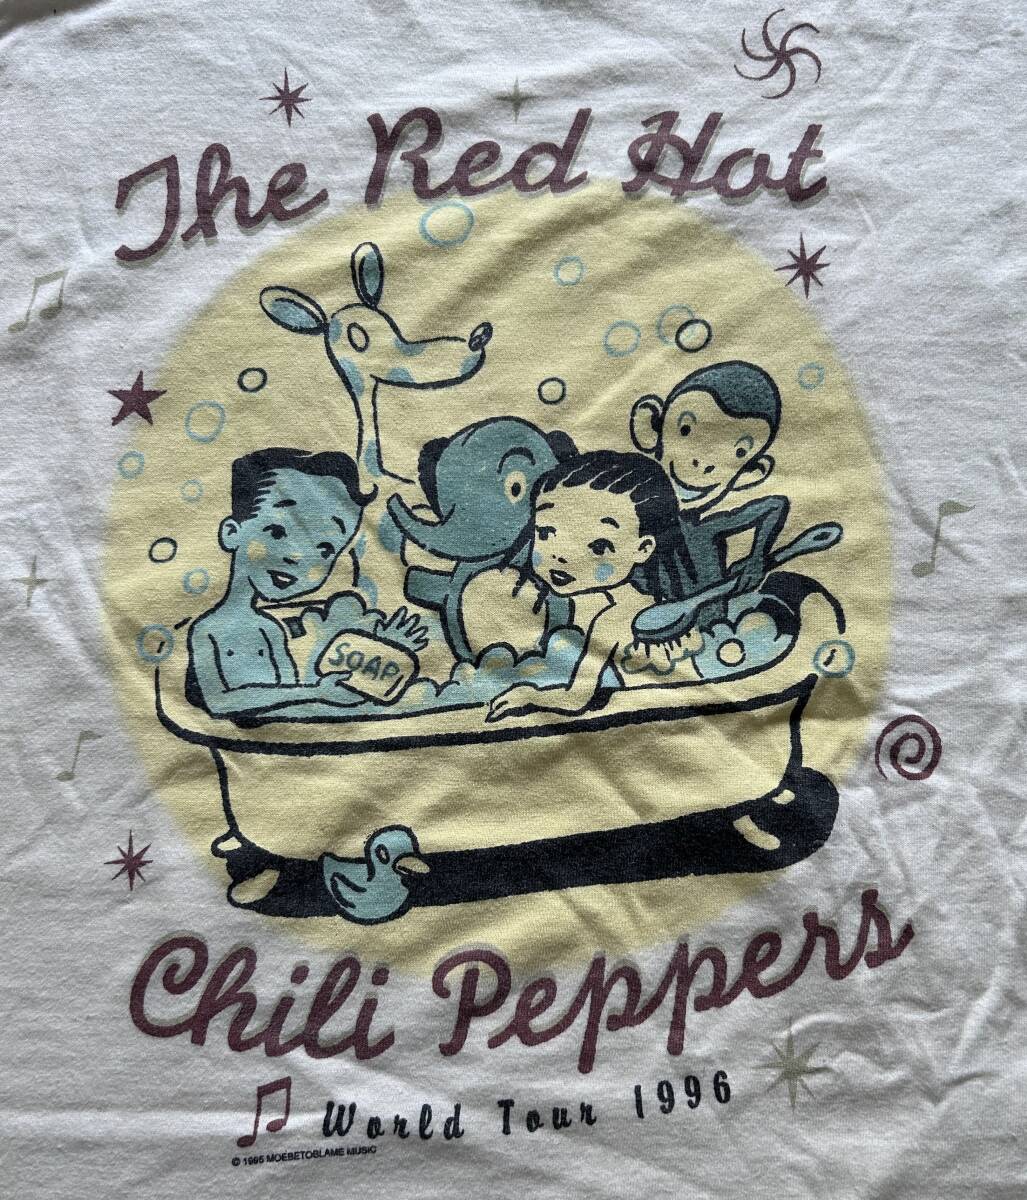 90\'sre Chile t рубашка red hot chili peppers красный hot Chile перец znirvana faith no more nine inch nails